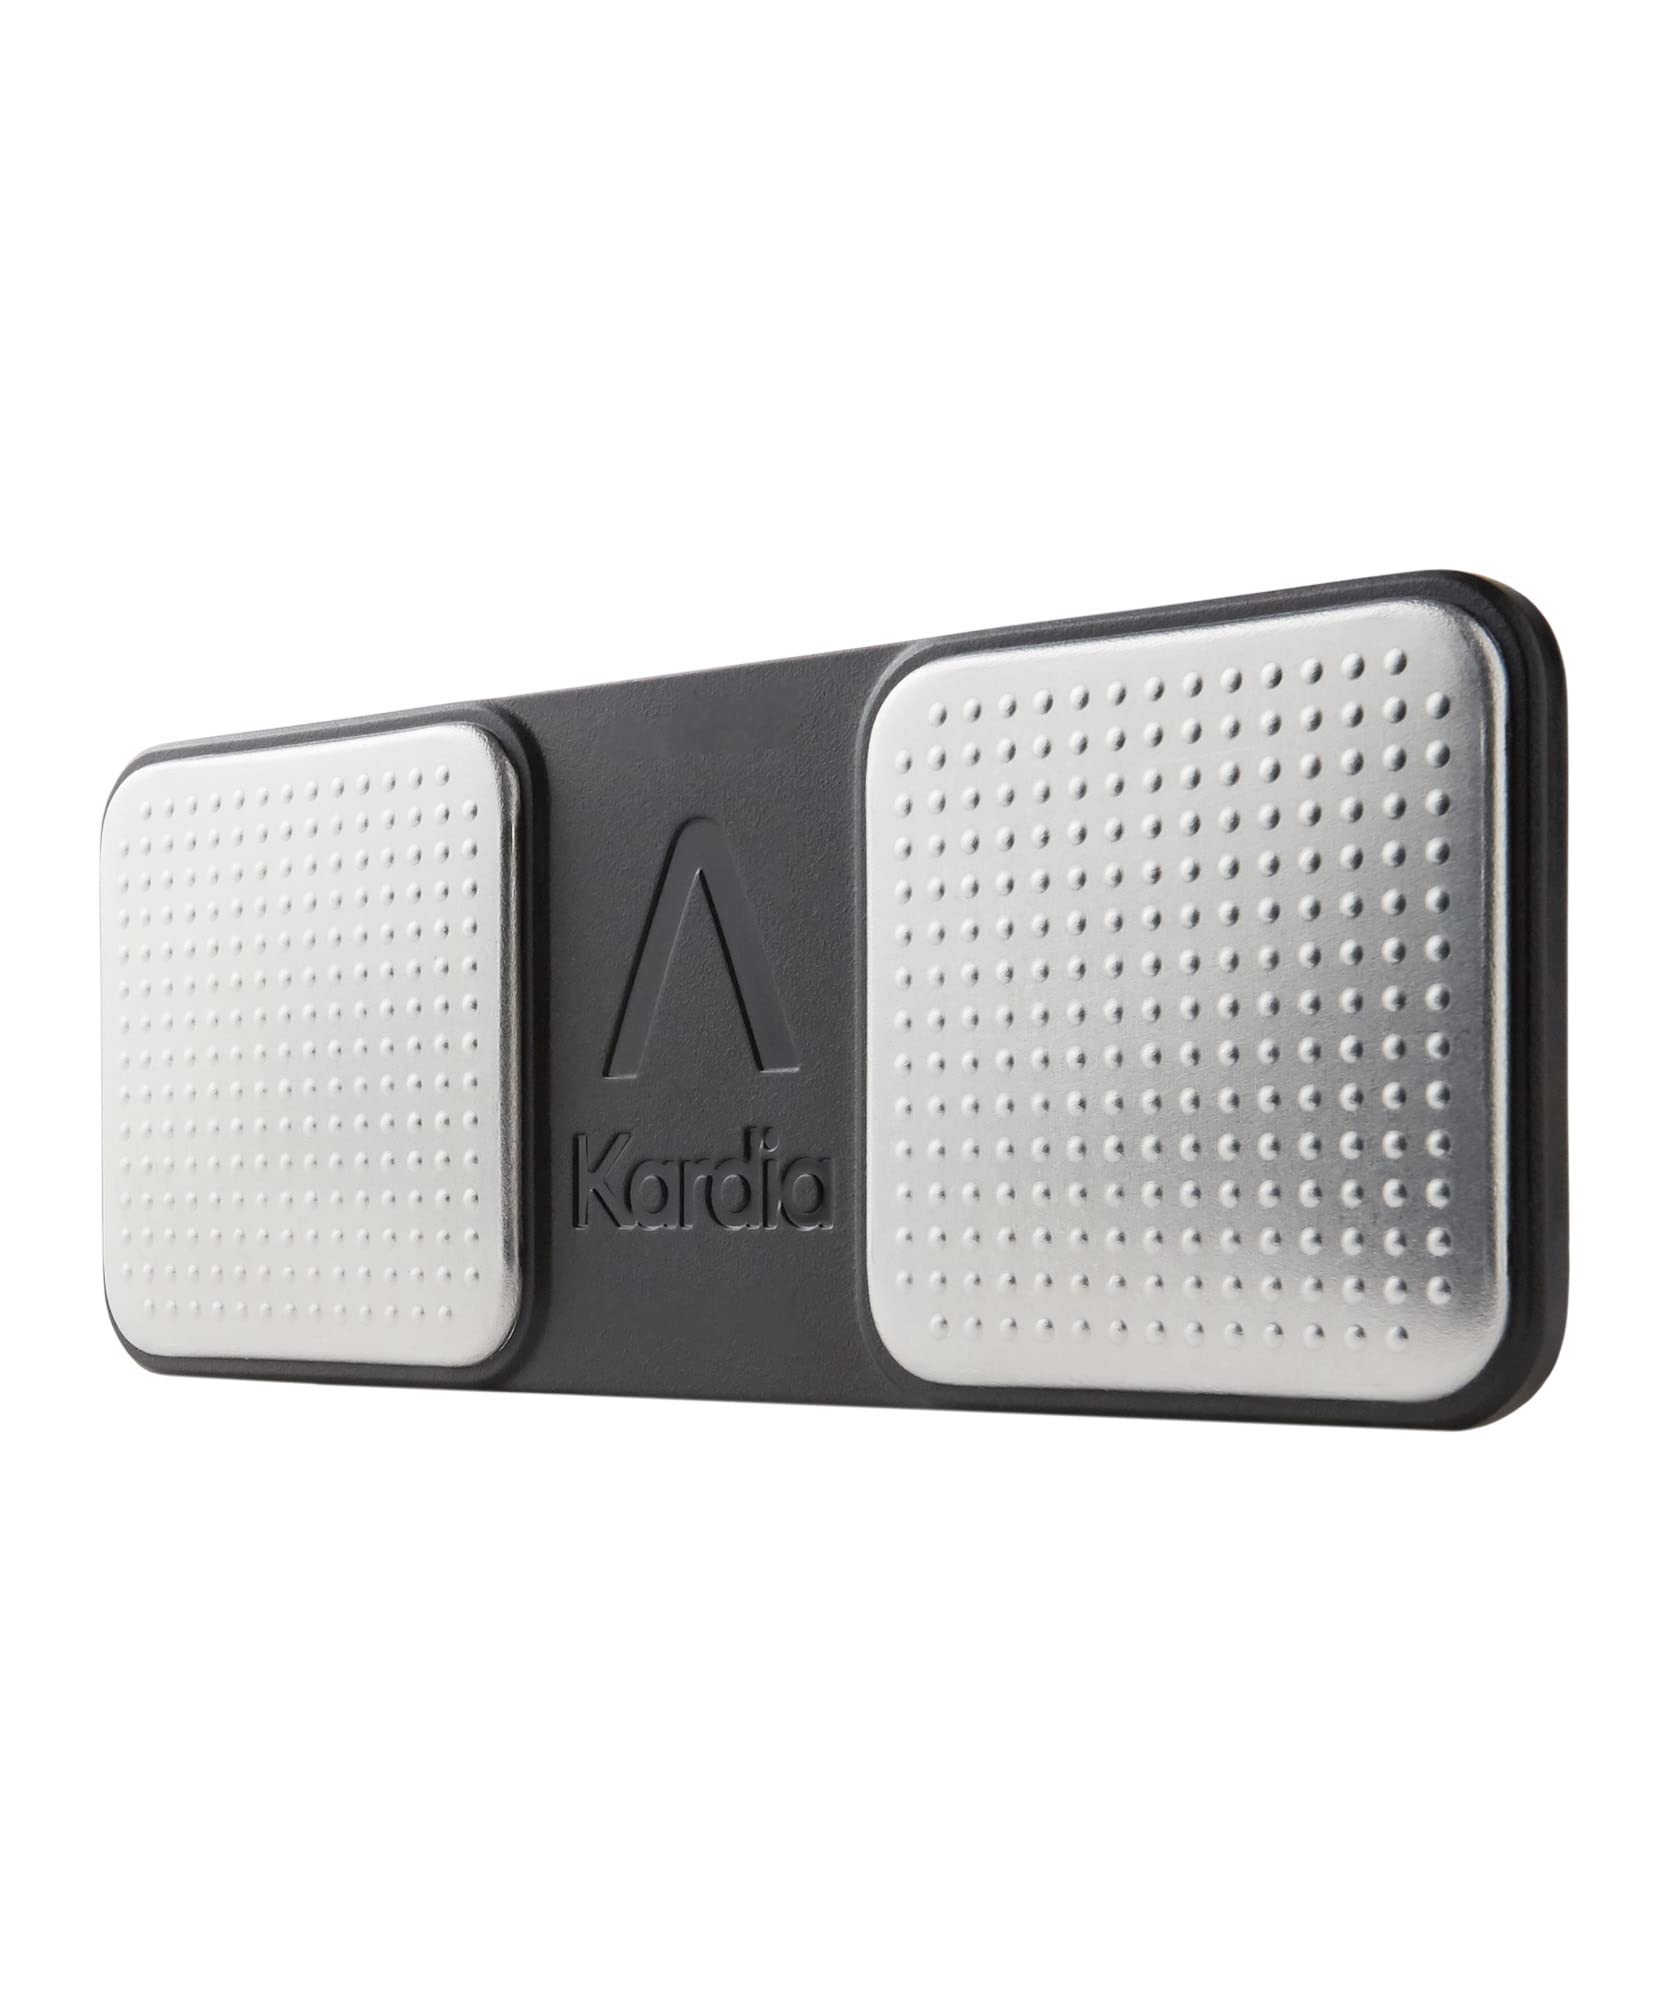 KardiaMobile 6L, 6 lead mobile ECG Monitor by AliveCor